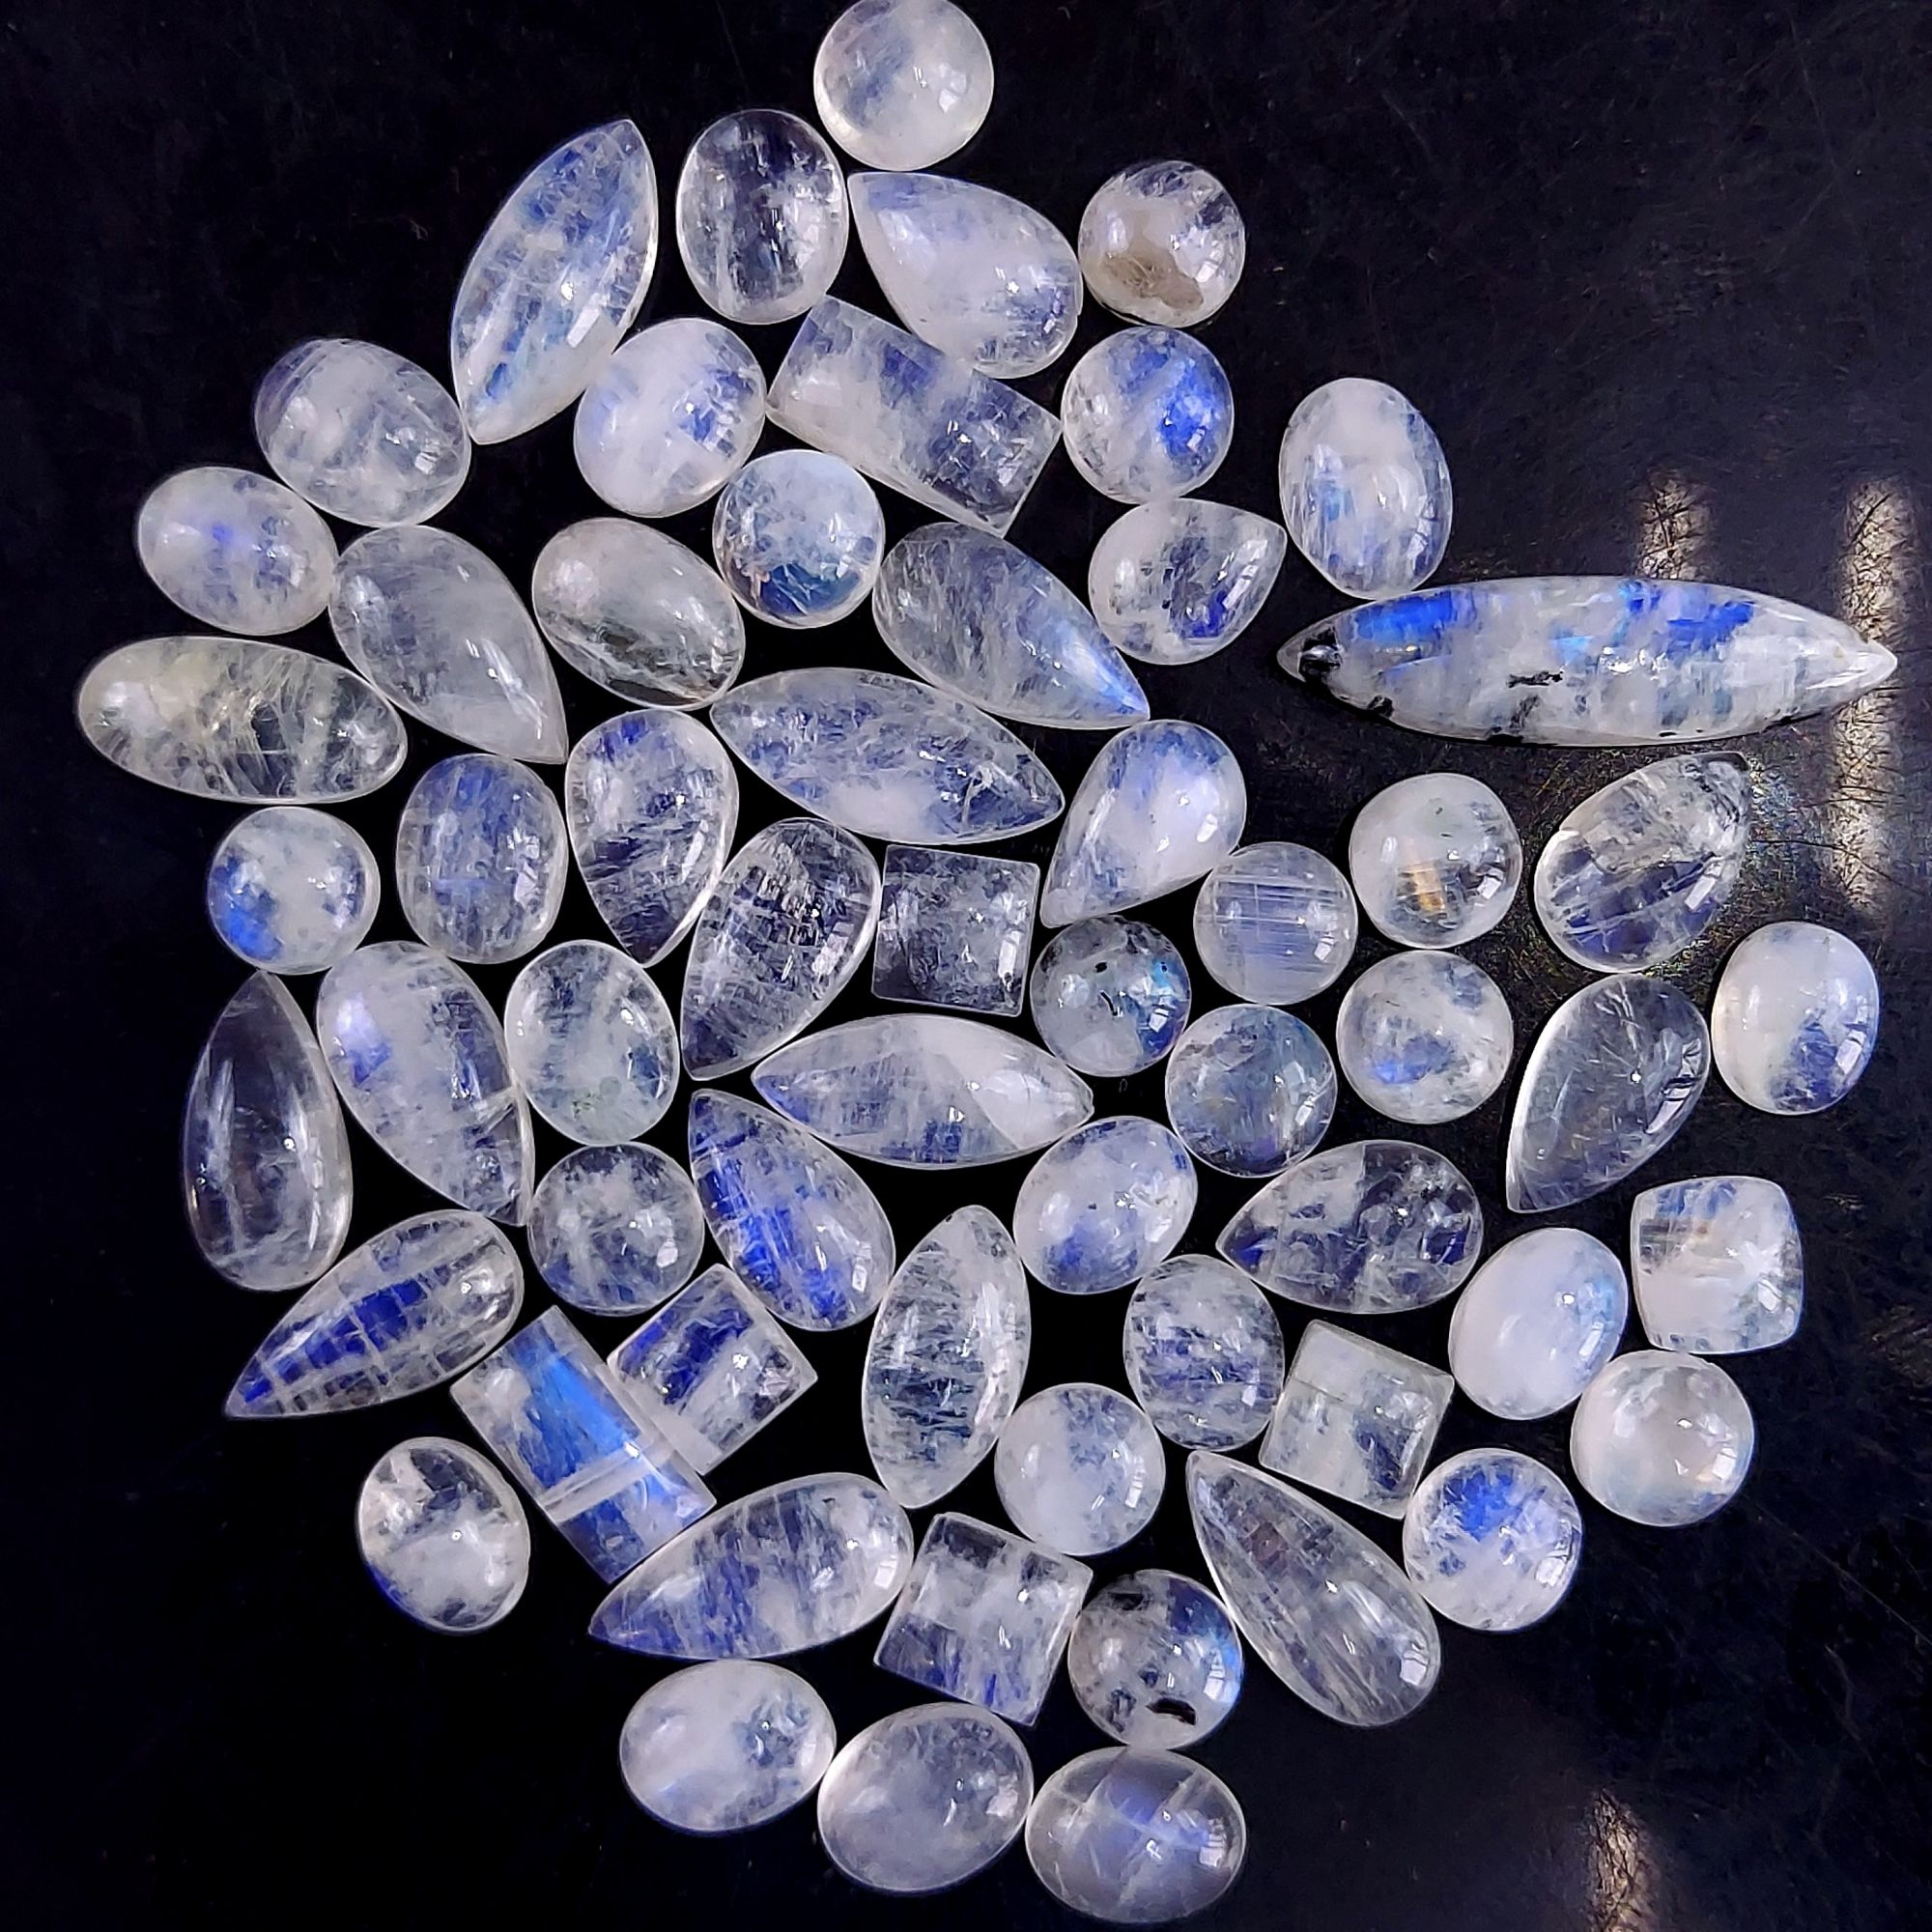 60Pcs 162Cts  Natural Rainbow Cabochon Gemstone For Jewelry Making Crystal Cabochon Semi-Precious Rainbow Moonstone Flat Back Gemstone Lot 27x5 5x5 mm#771